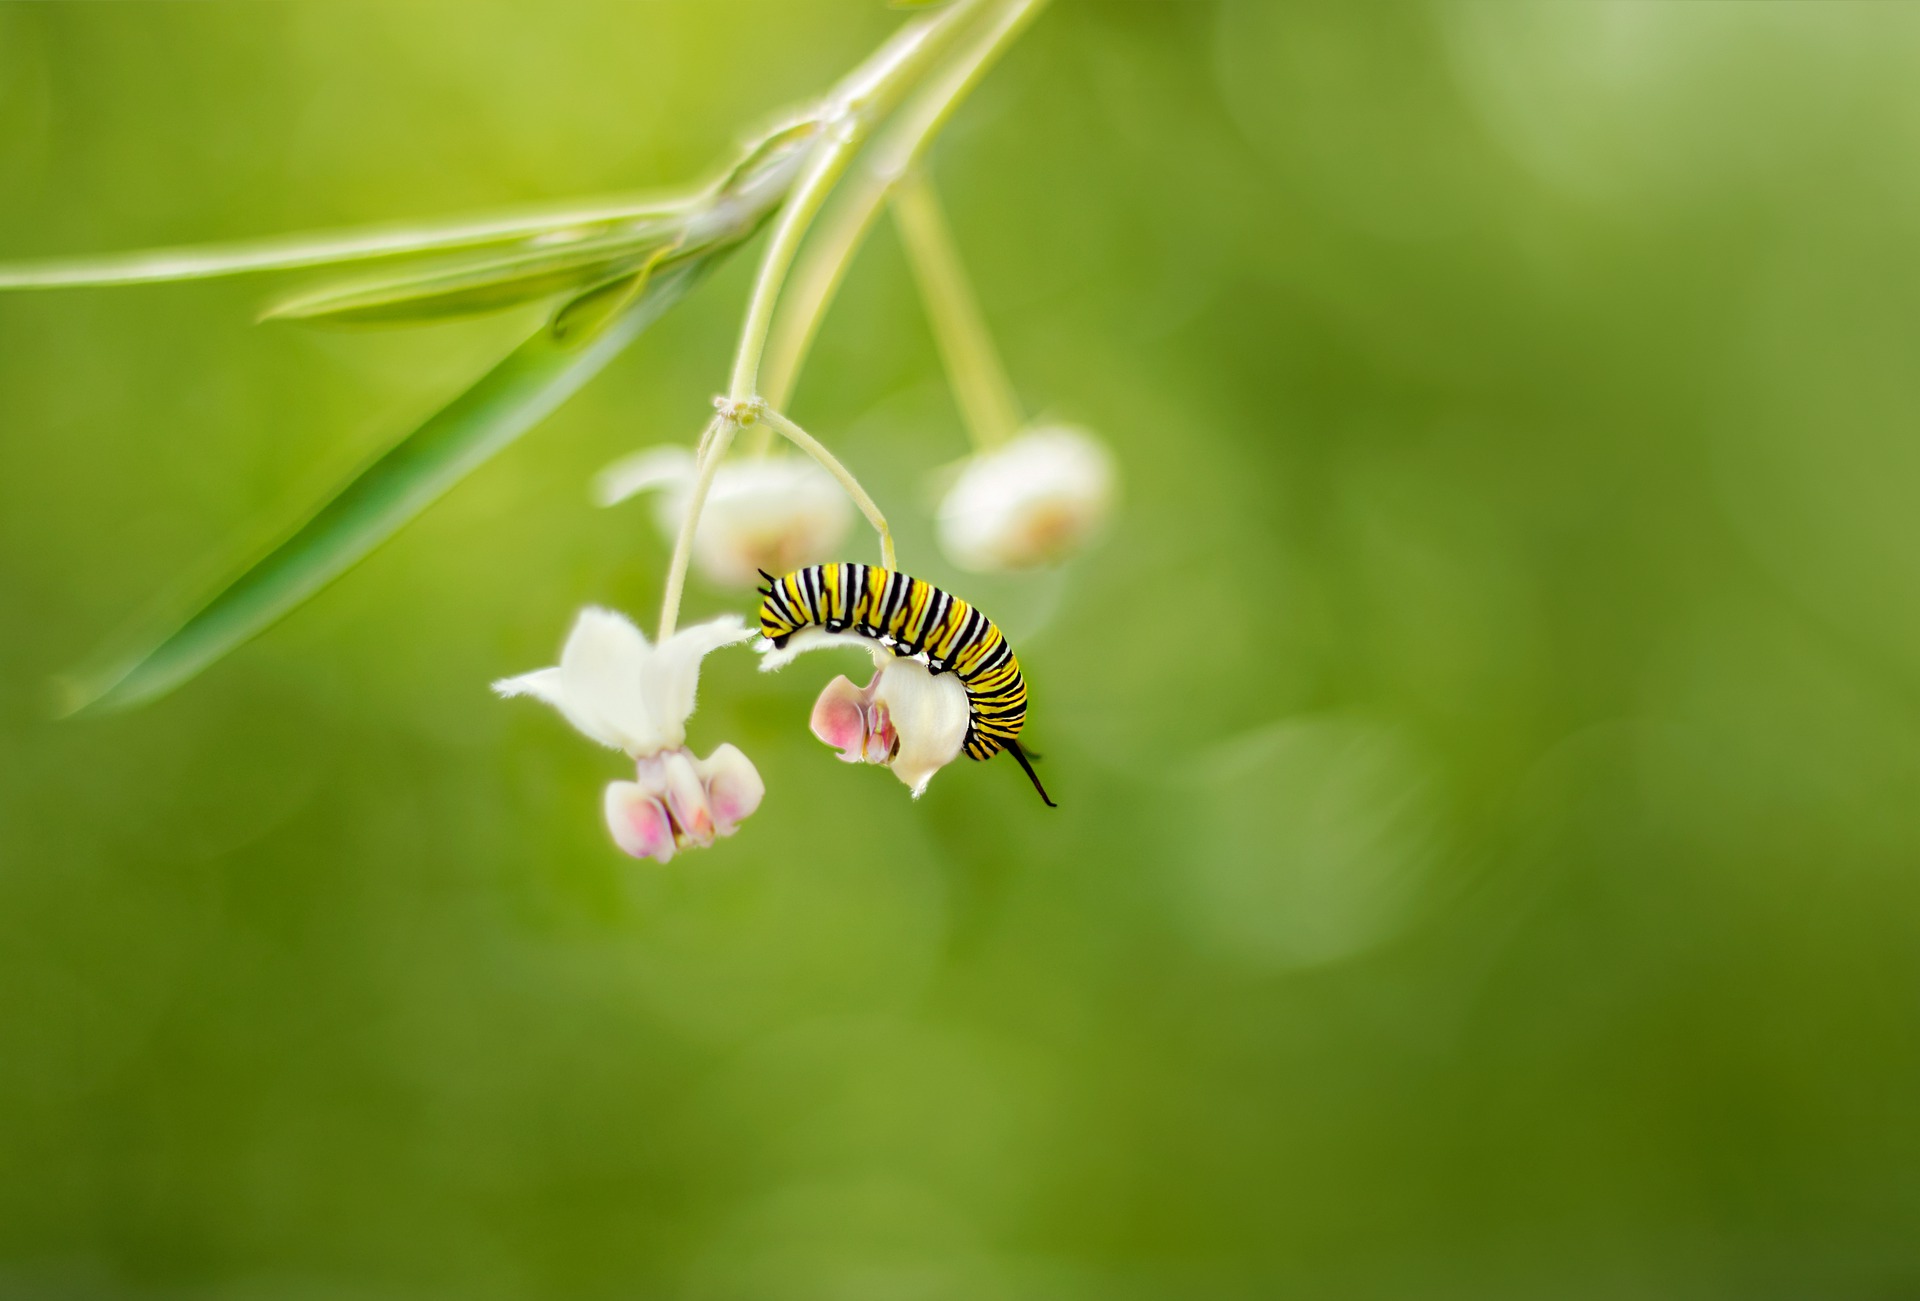 Monarch caterpillar on flower.